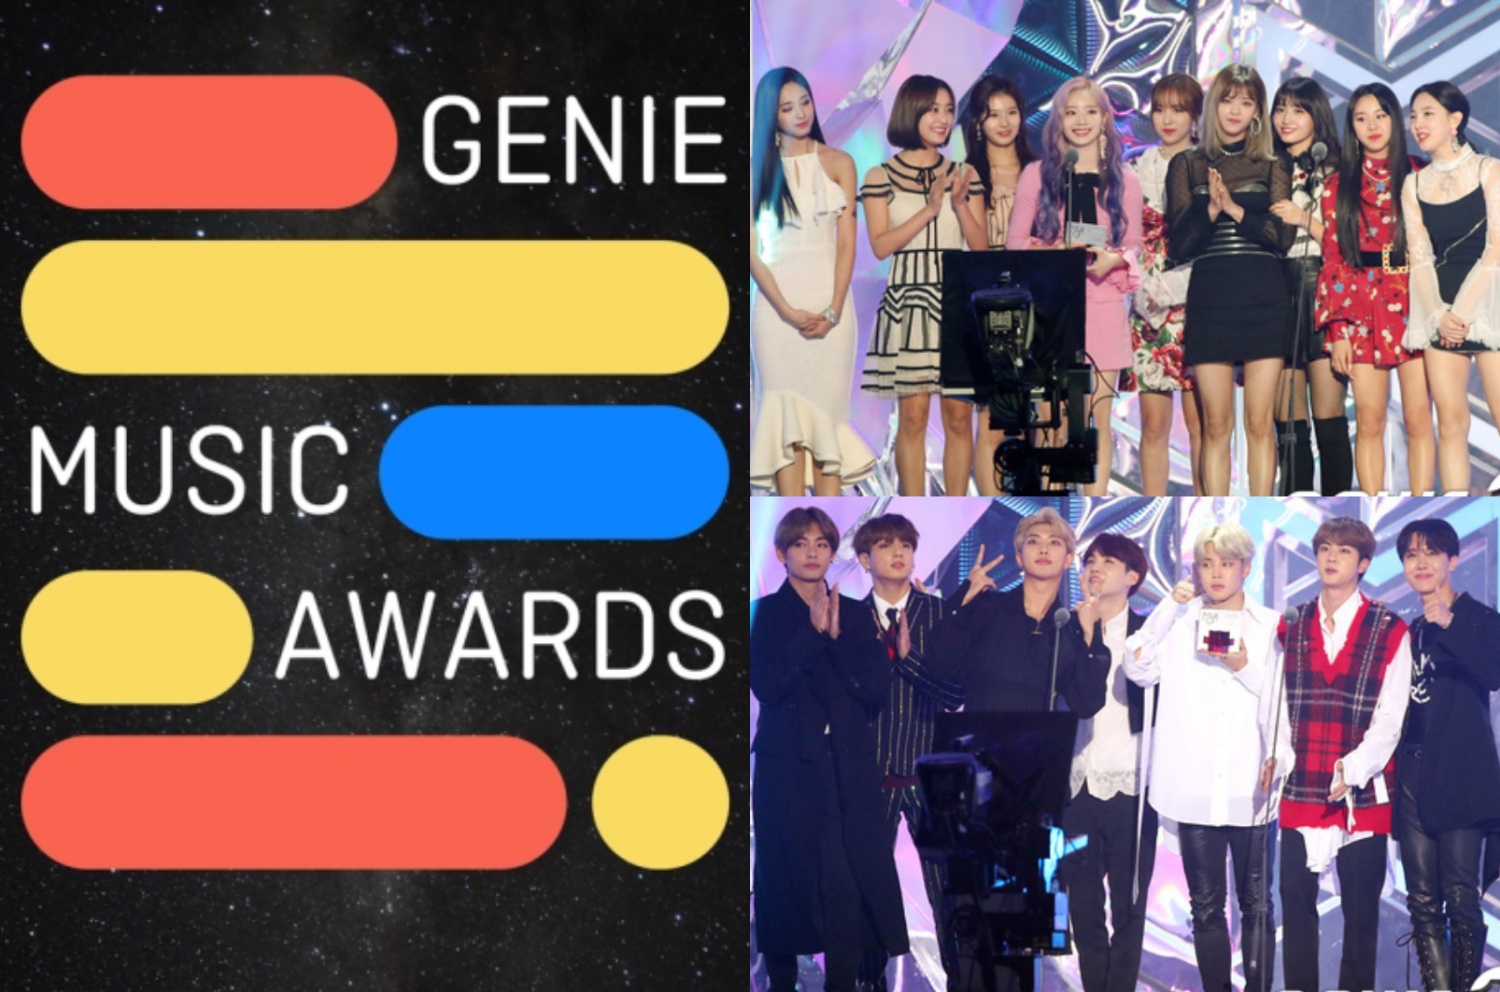 Genie Music Awards 2022: Date, venue, more info announced